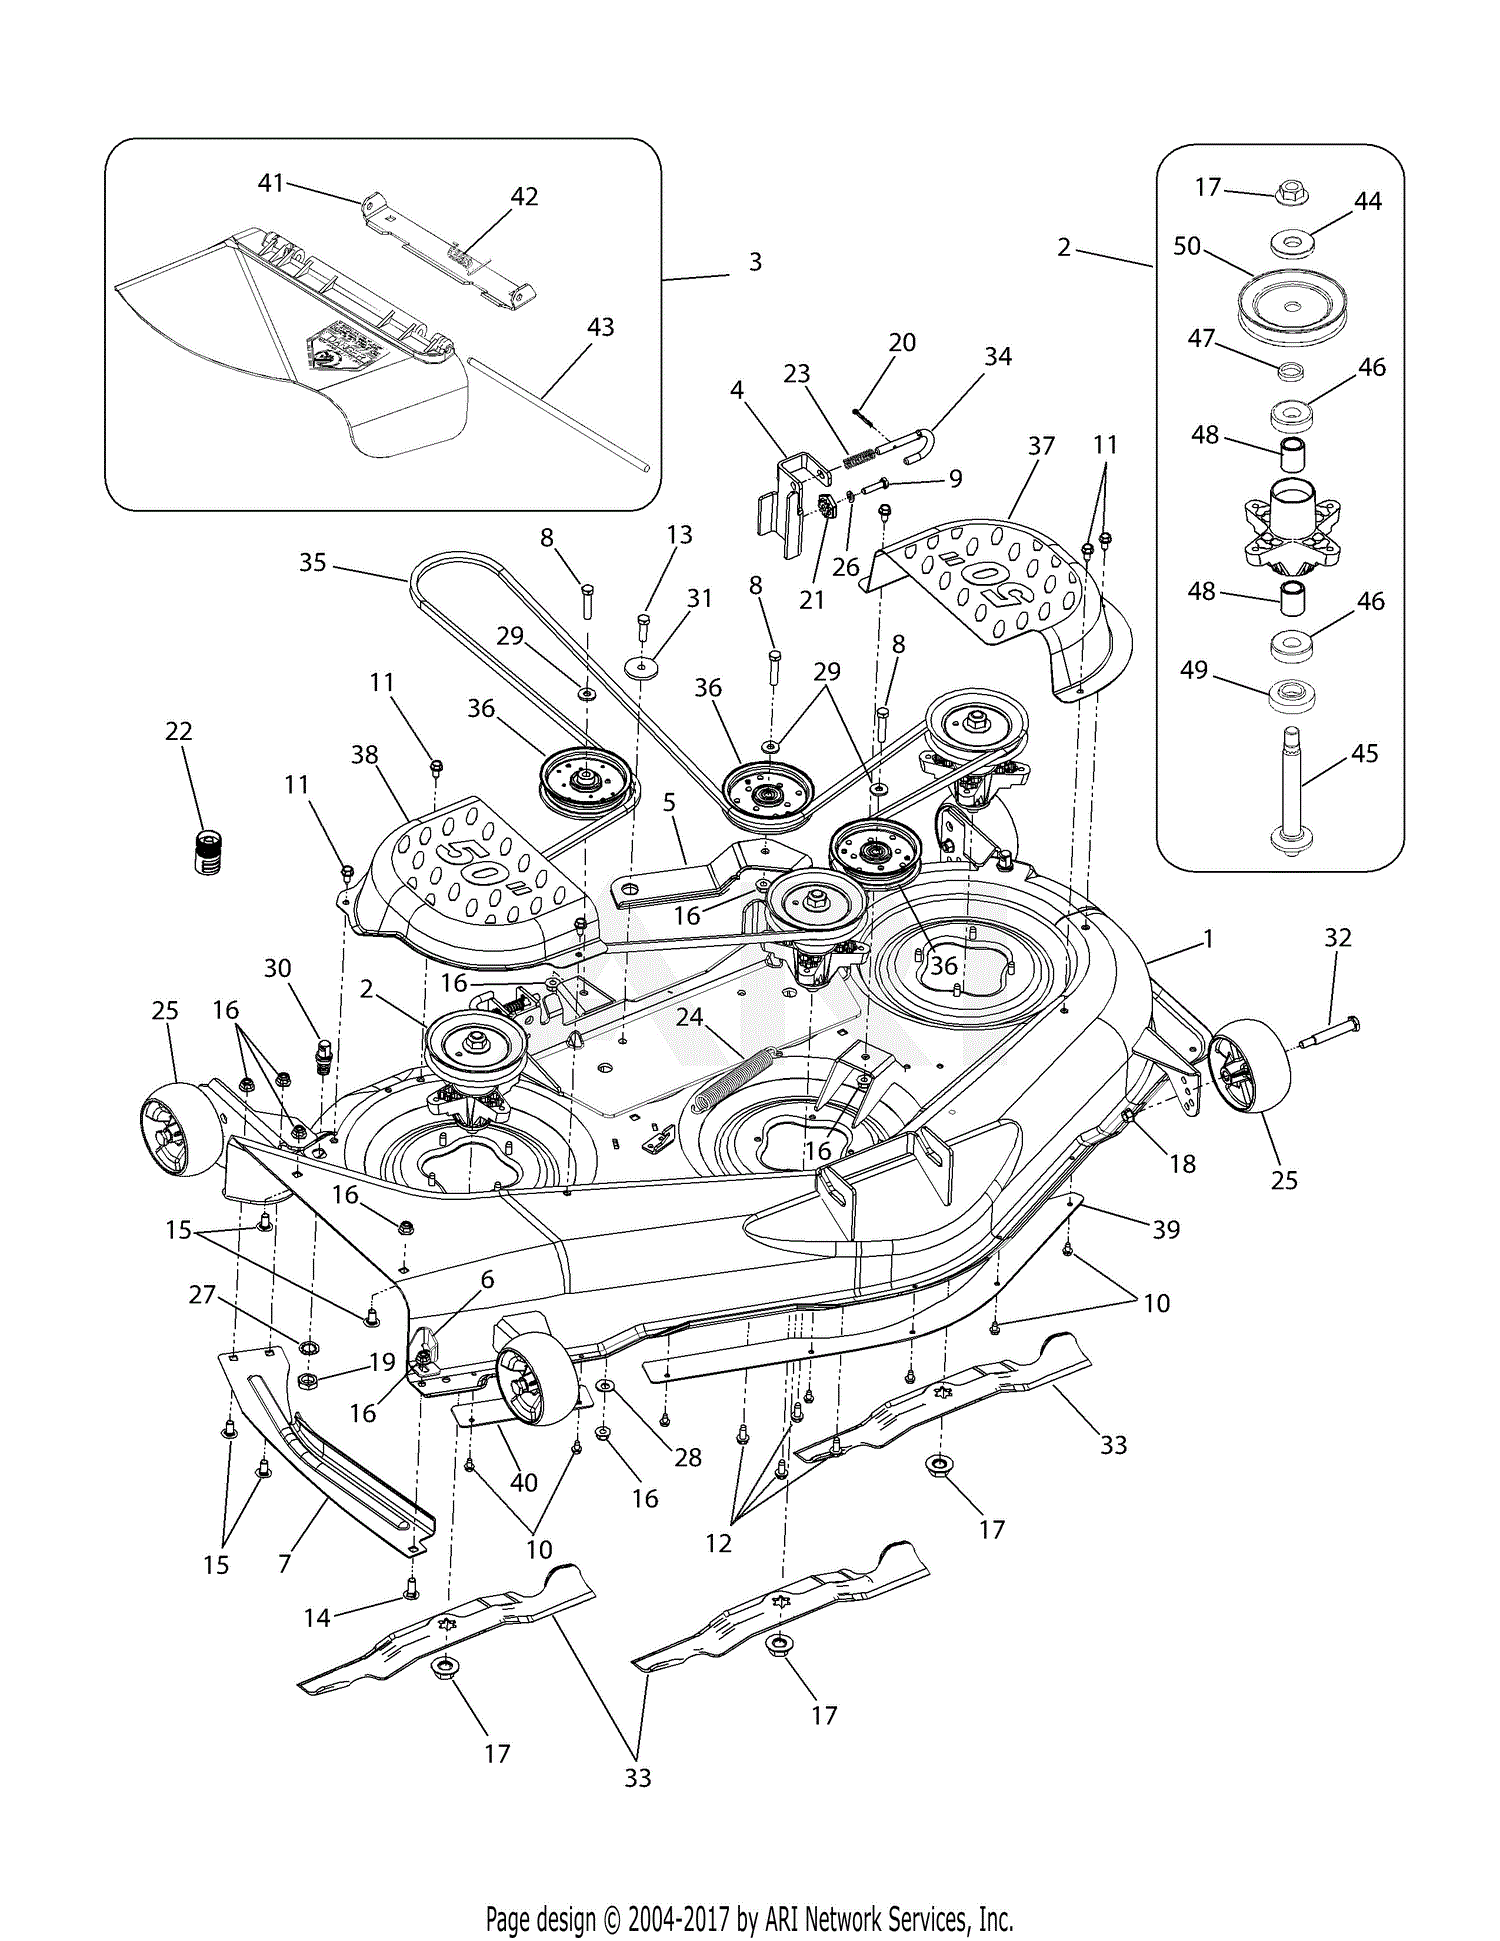 [DIAGRAM] 1968 Mustang Wiring Diagrams Wiring Diagram FULL Version HD